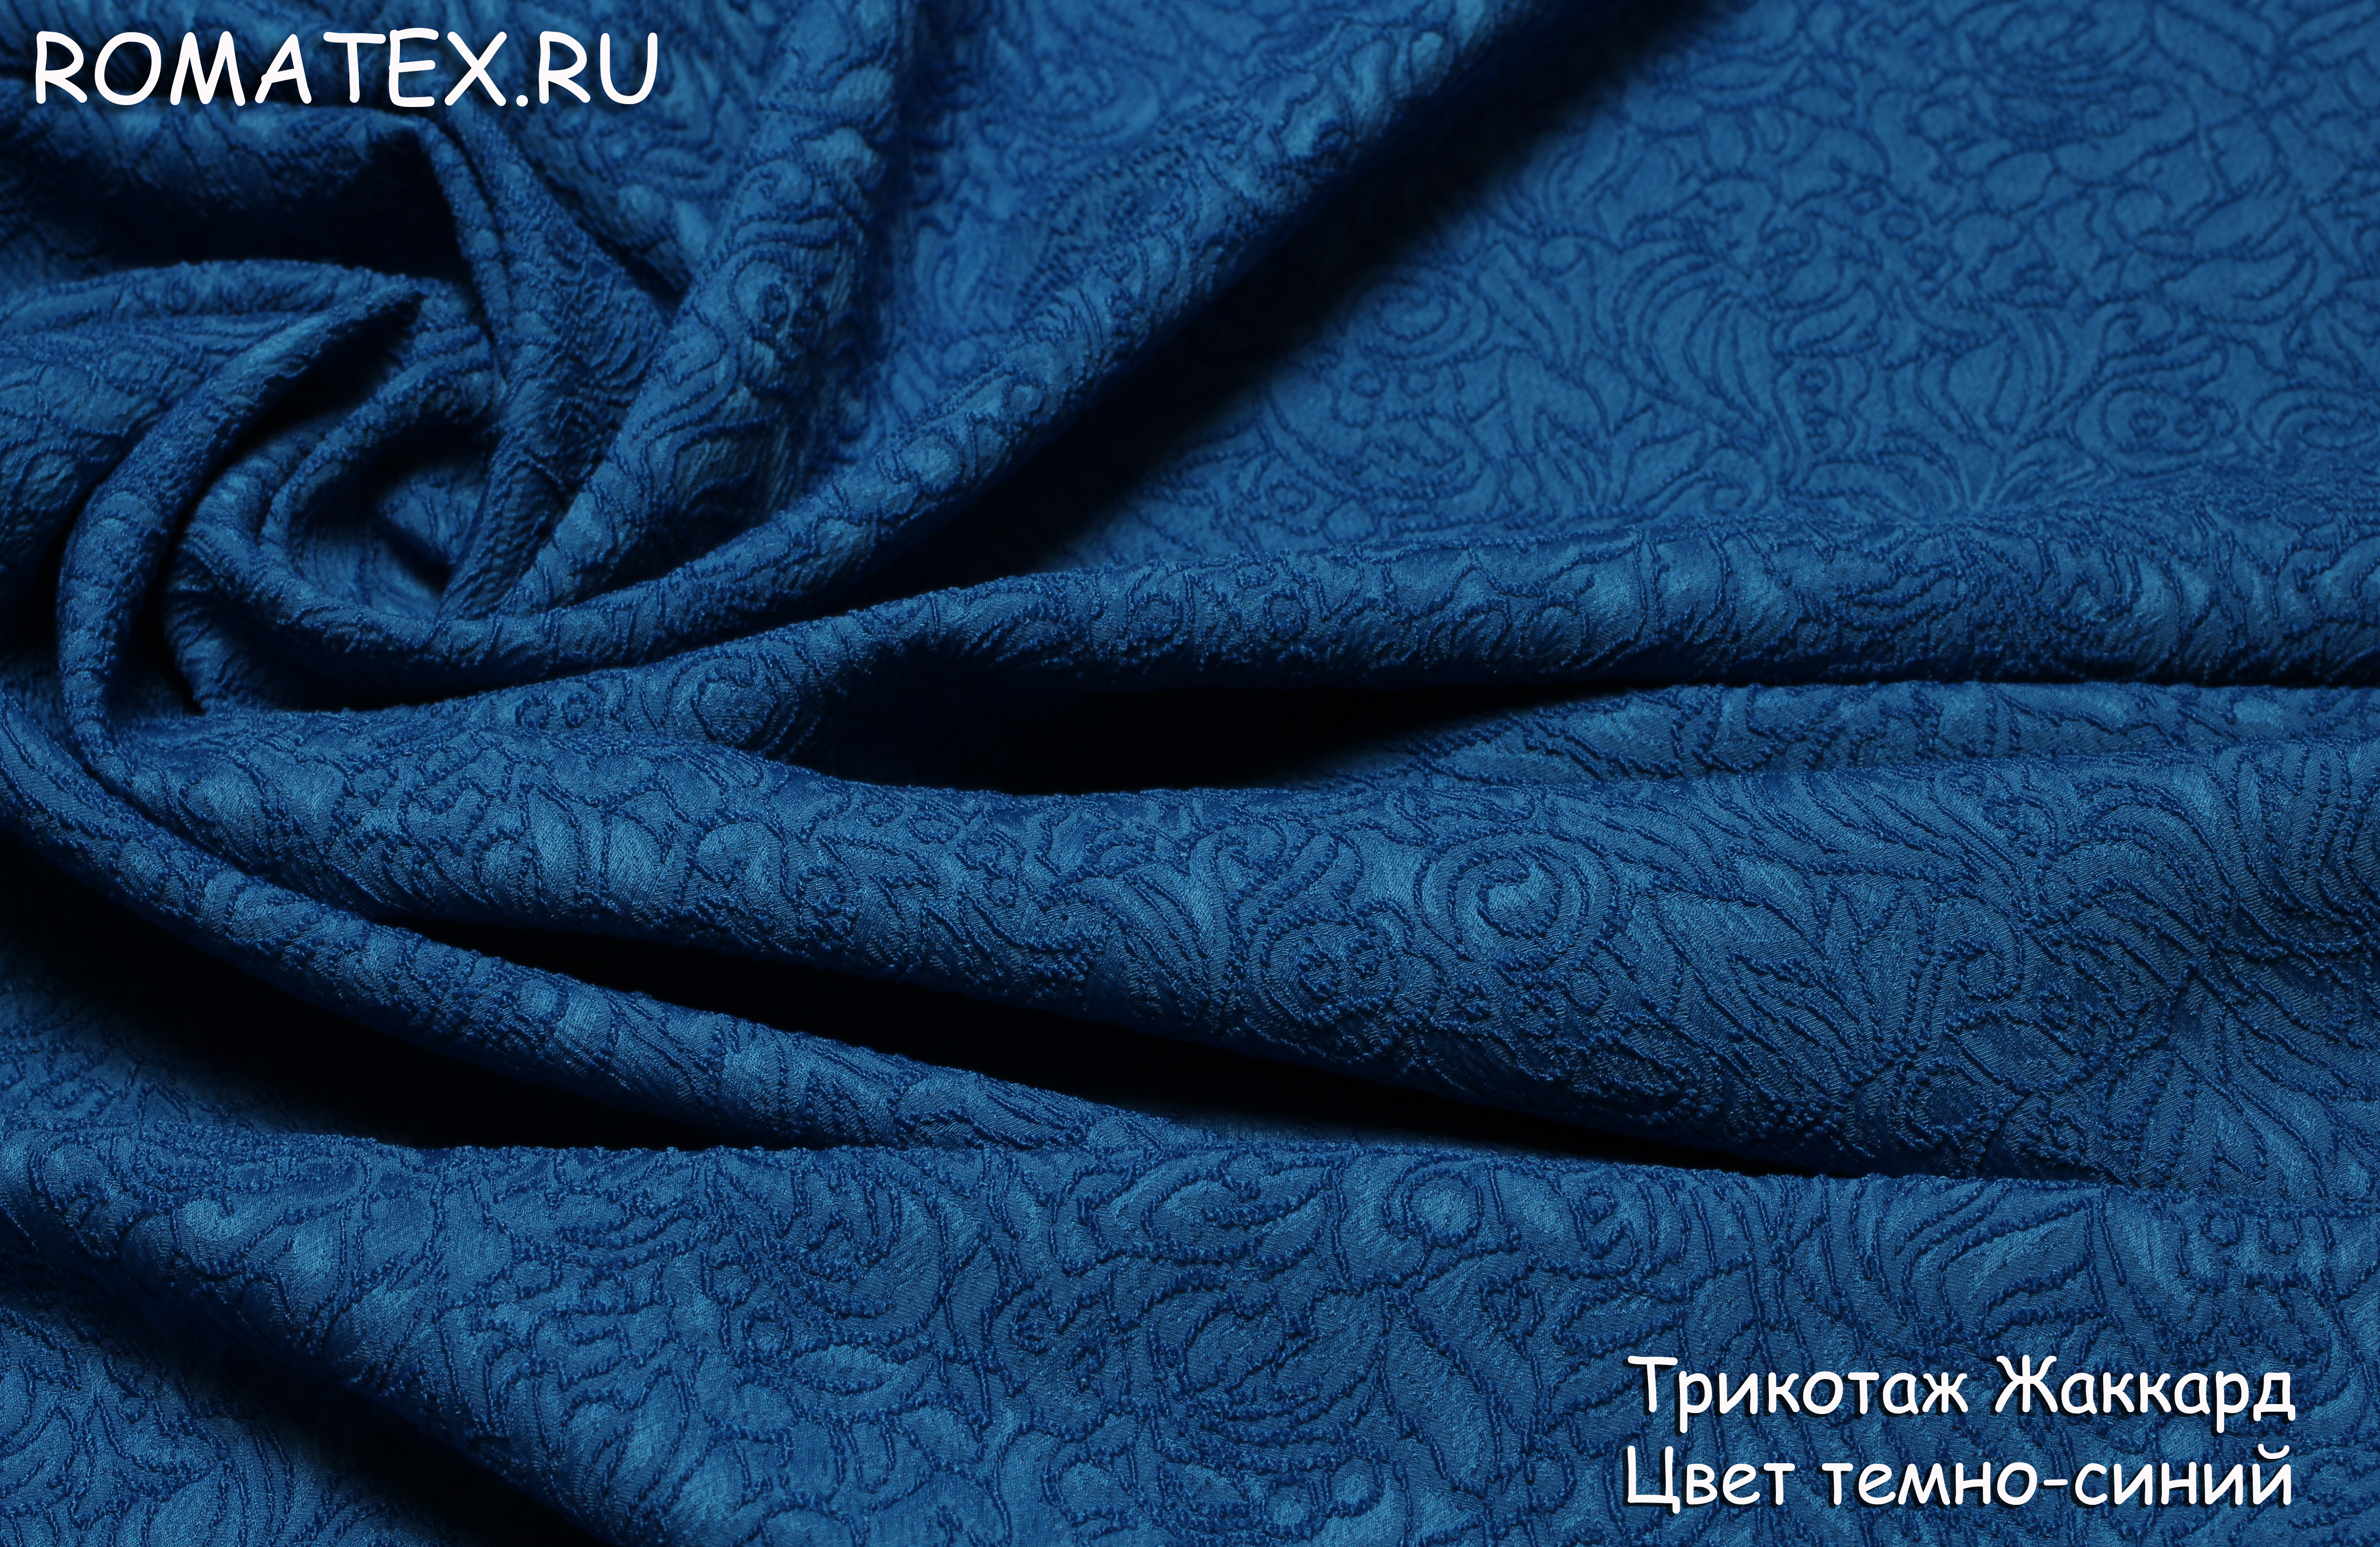 Ткань Трикотаж жаккард цвет темно-синий - купить в магазине Роматекс